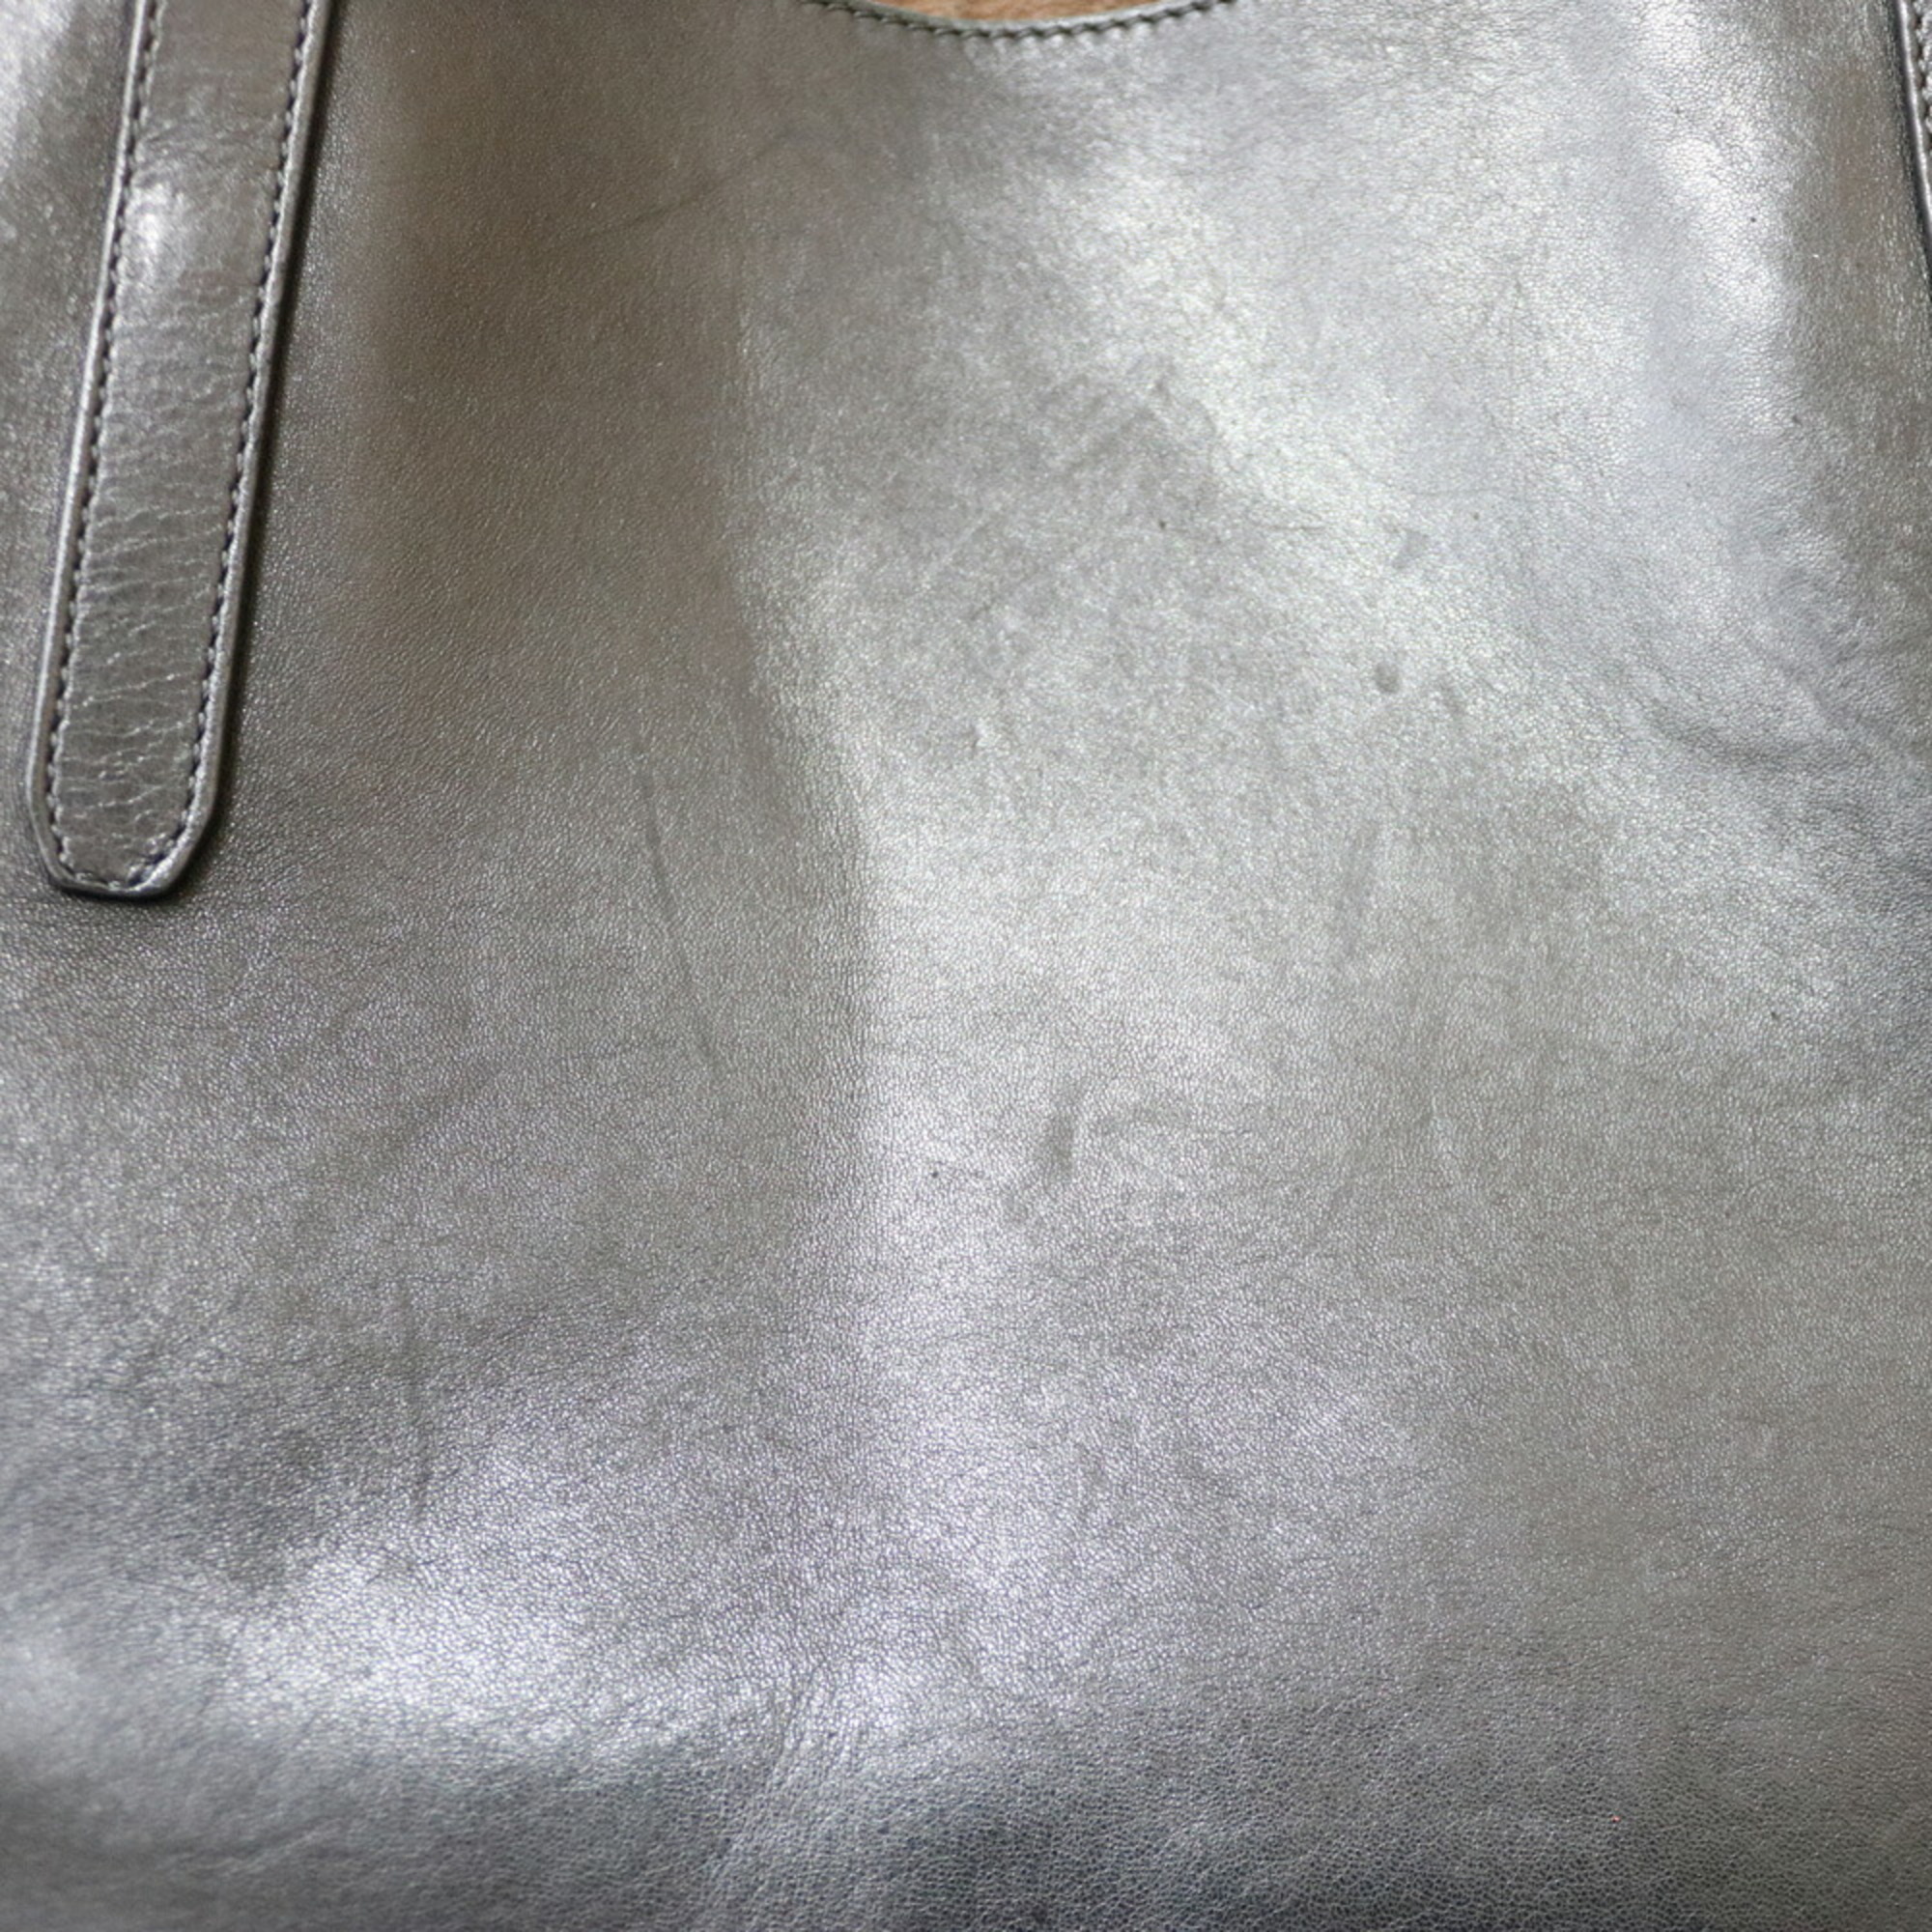 JIMMY CHOO Shoulder Bag Tote Black Women's Leather